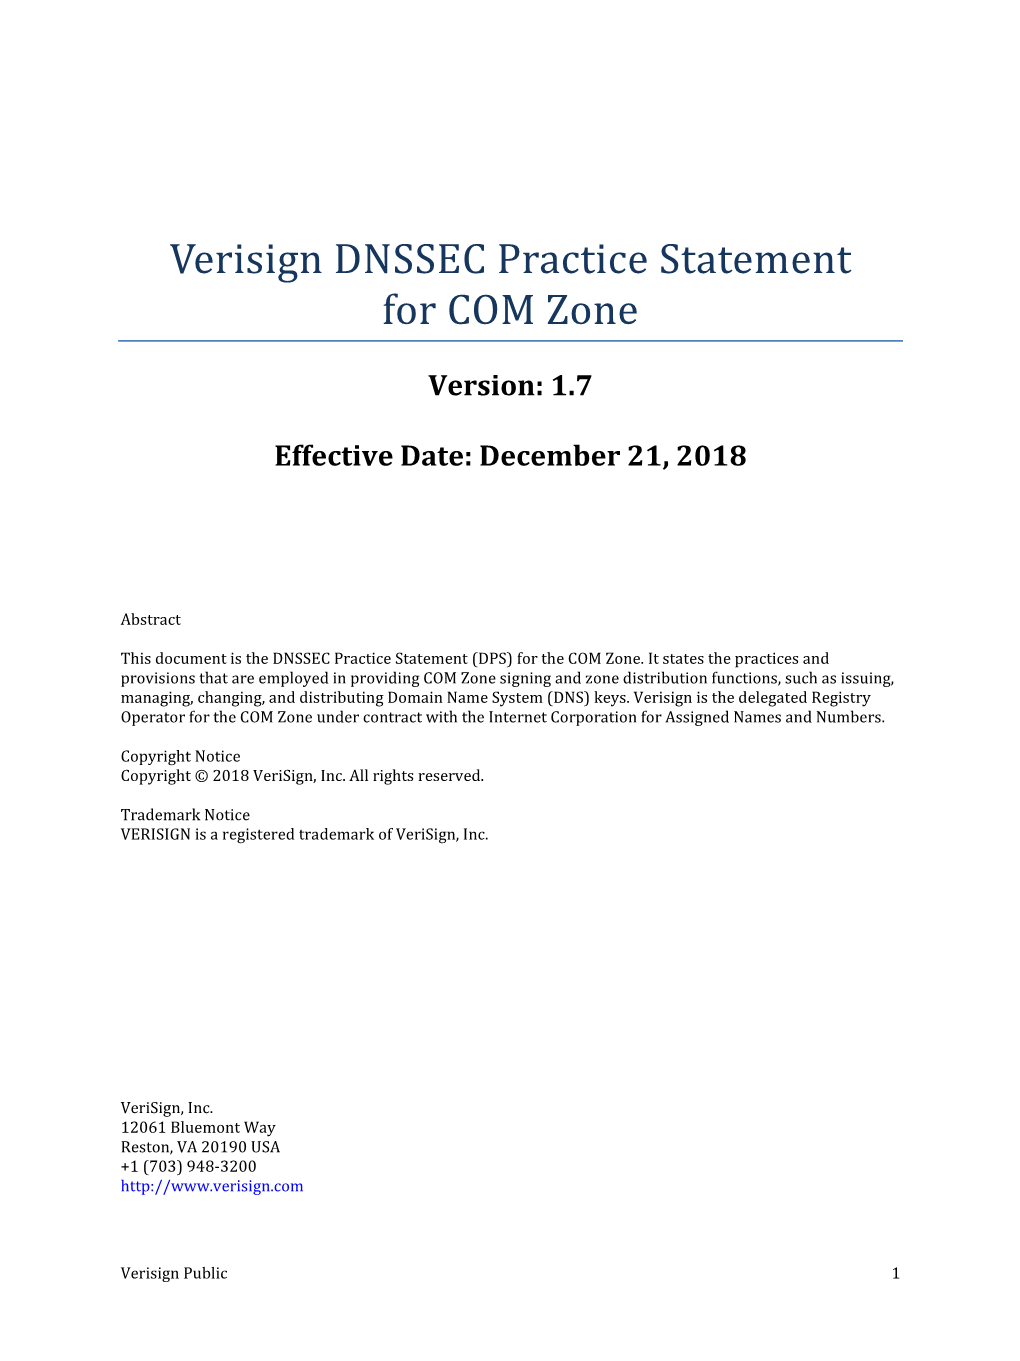 Verisign DNSSEC Practice Statement for COM Zone